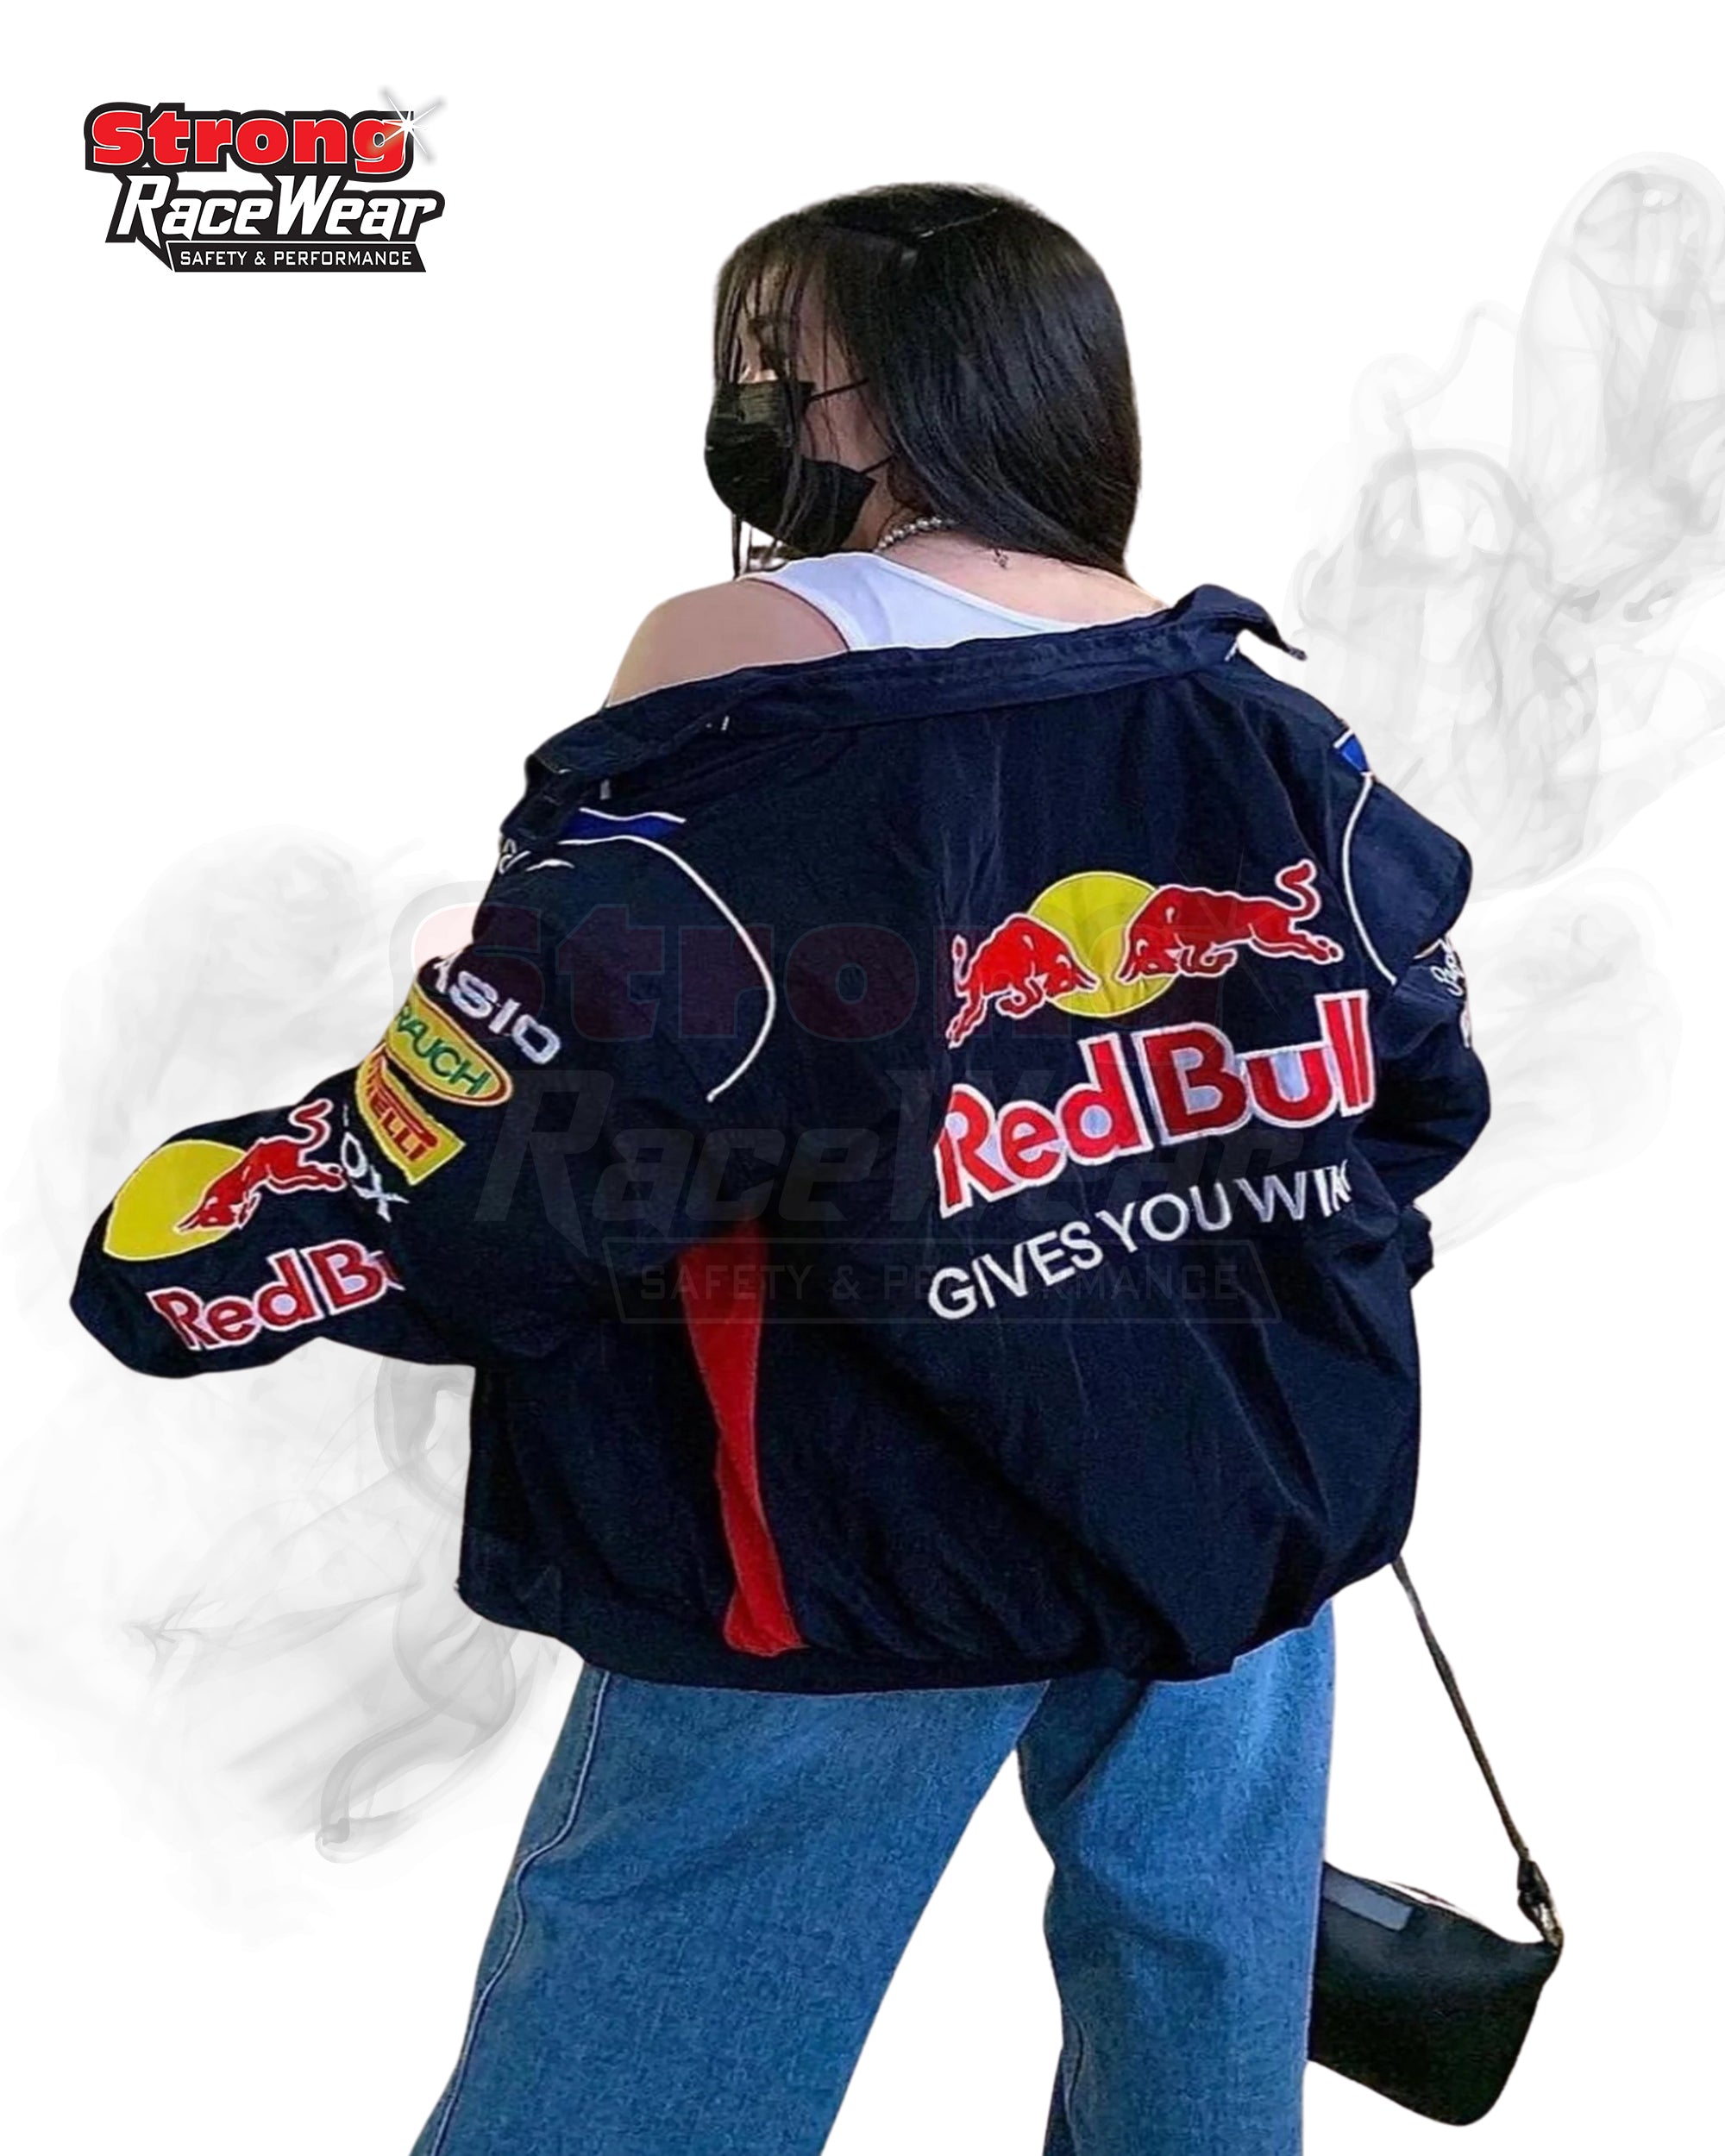 Red Bull Vantage Jacket Sublimation Printed